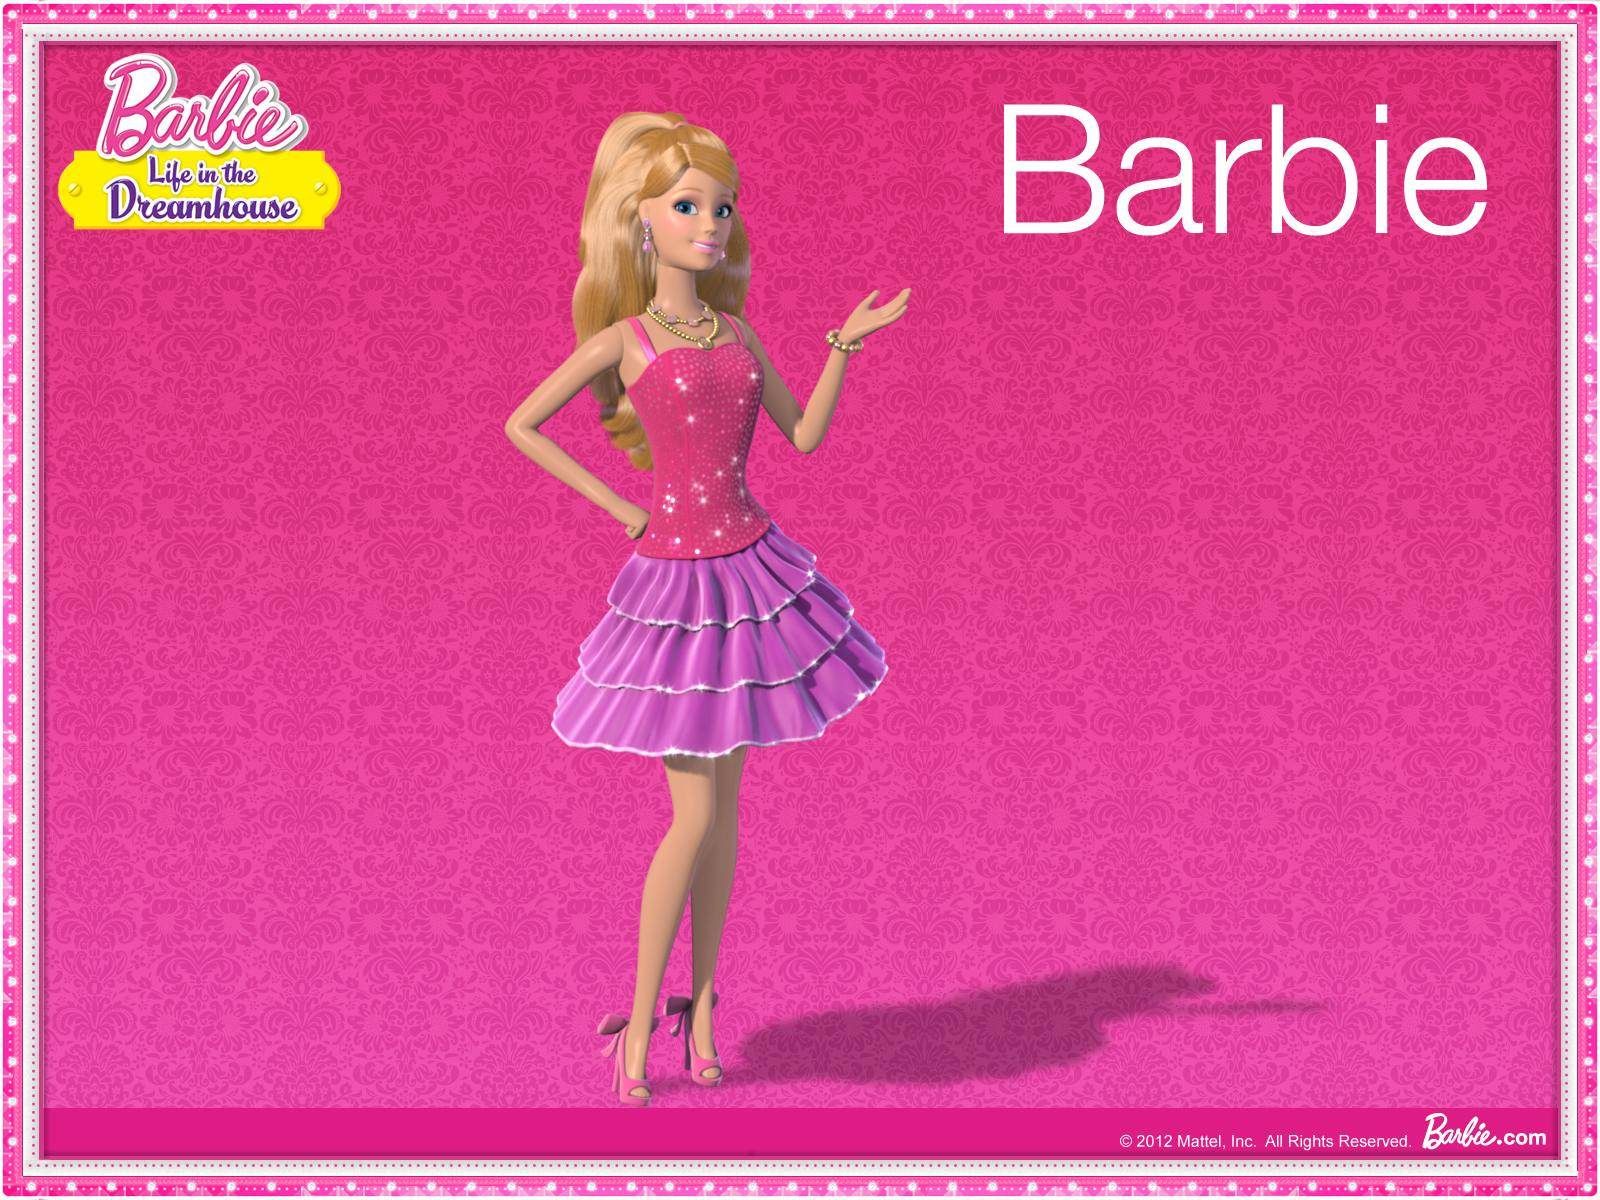 barbie live wallpaper,rosa,puppe,barbie,spielzeug